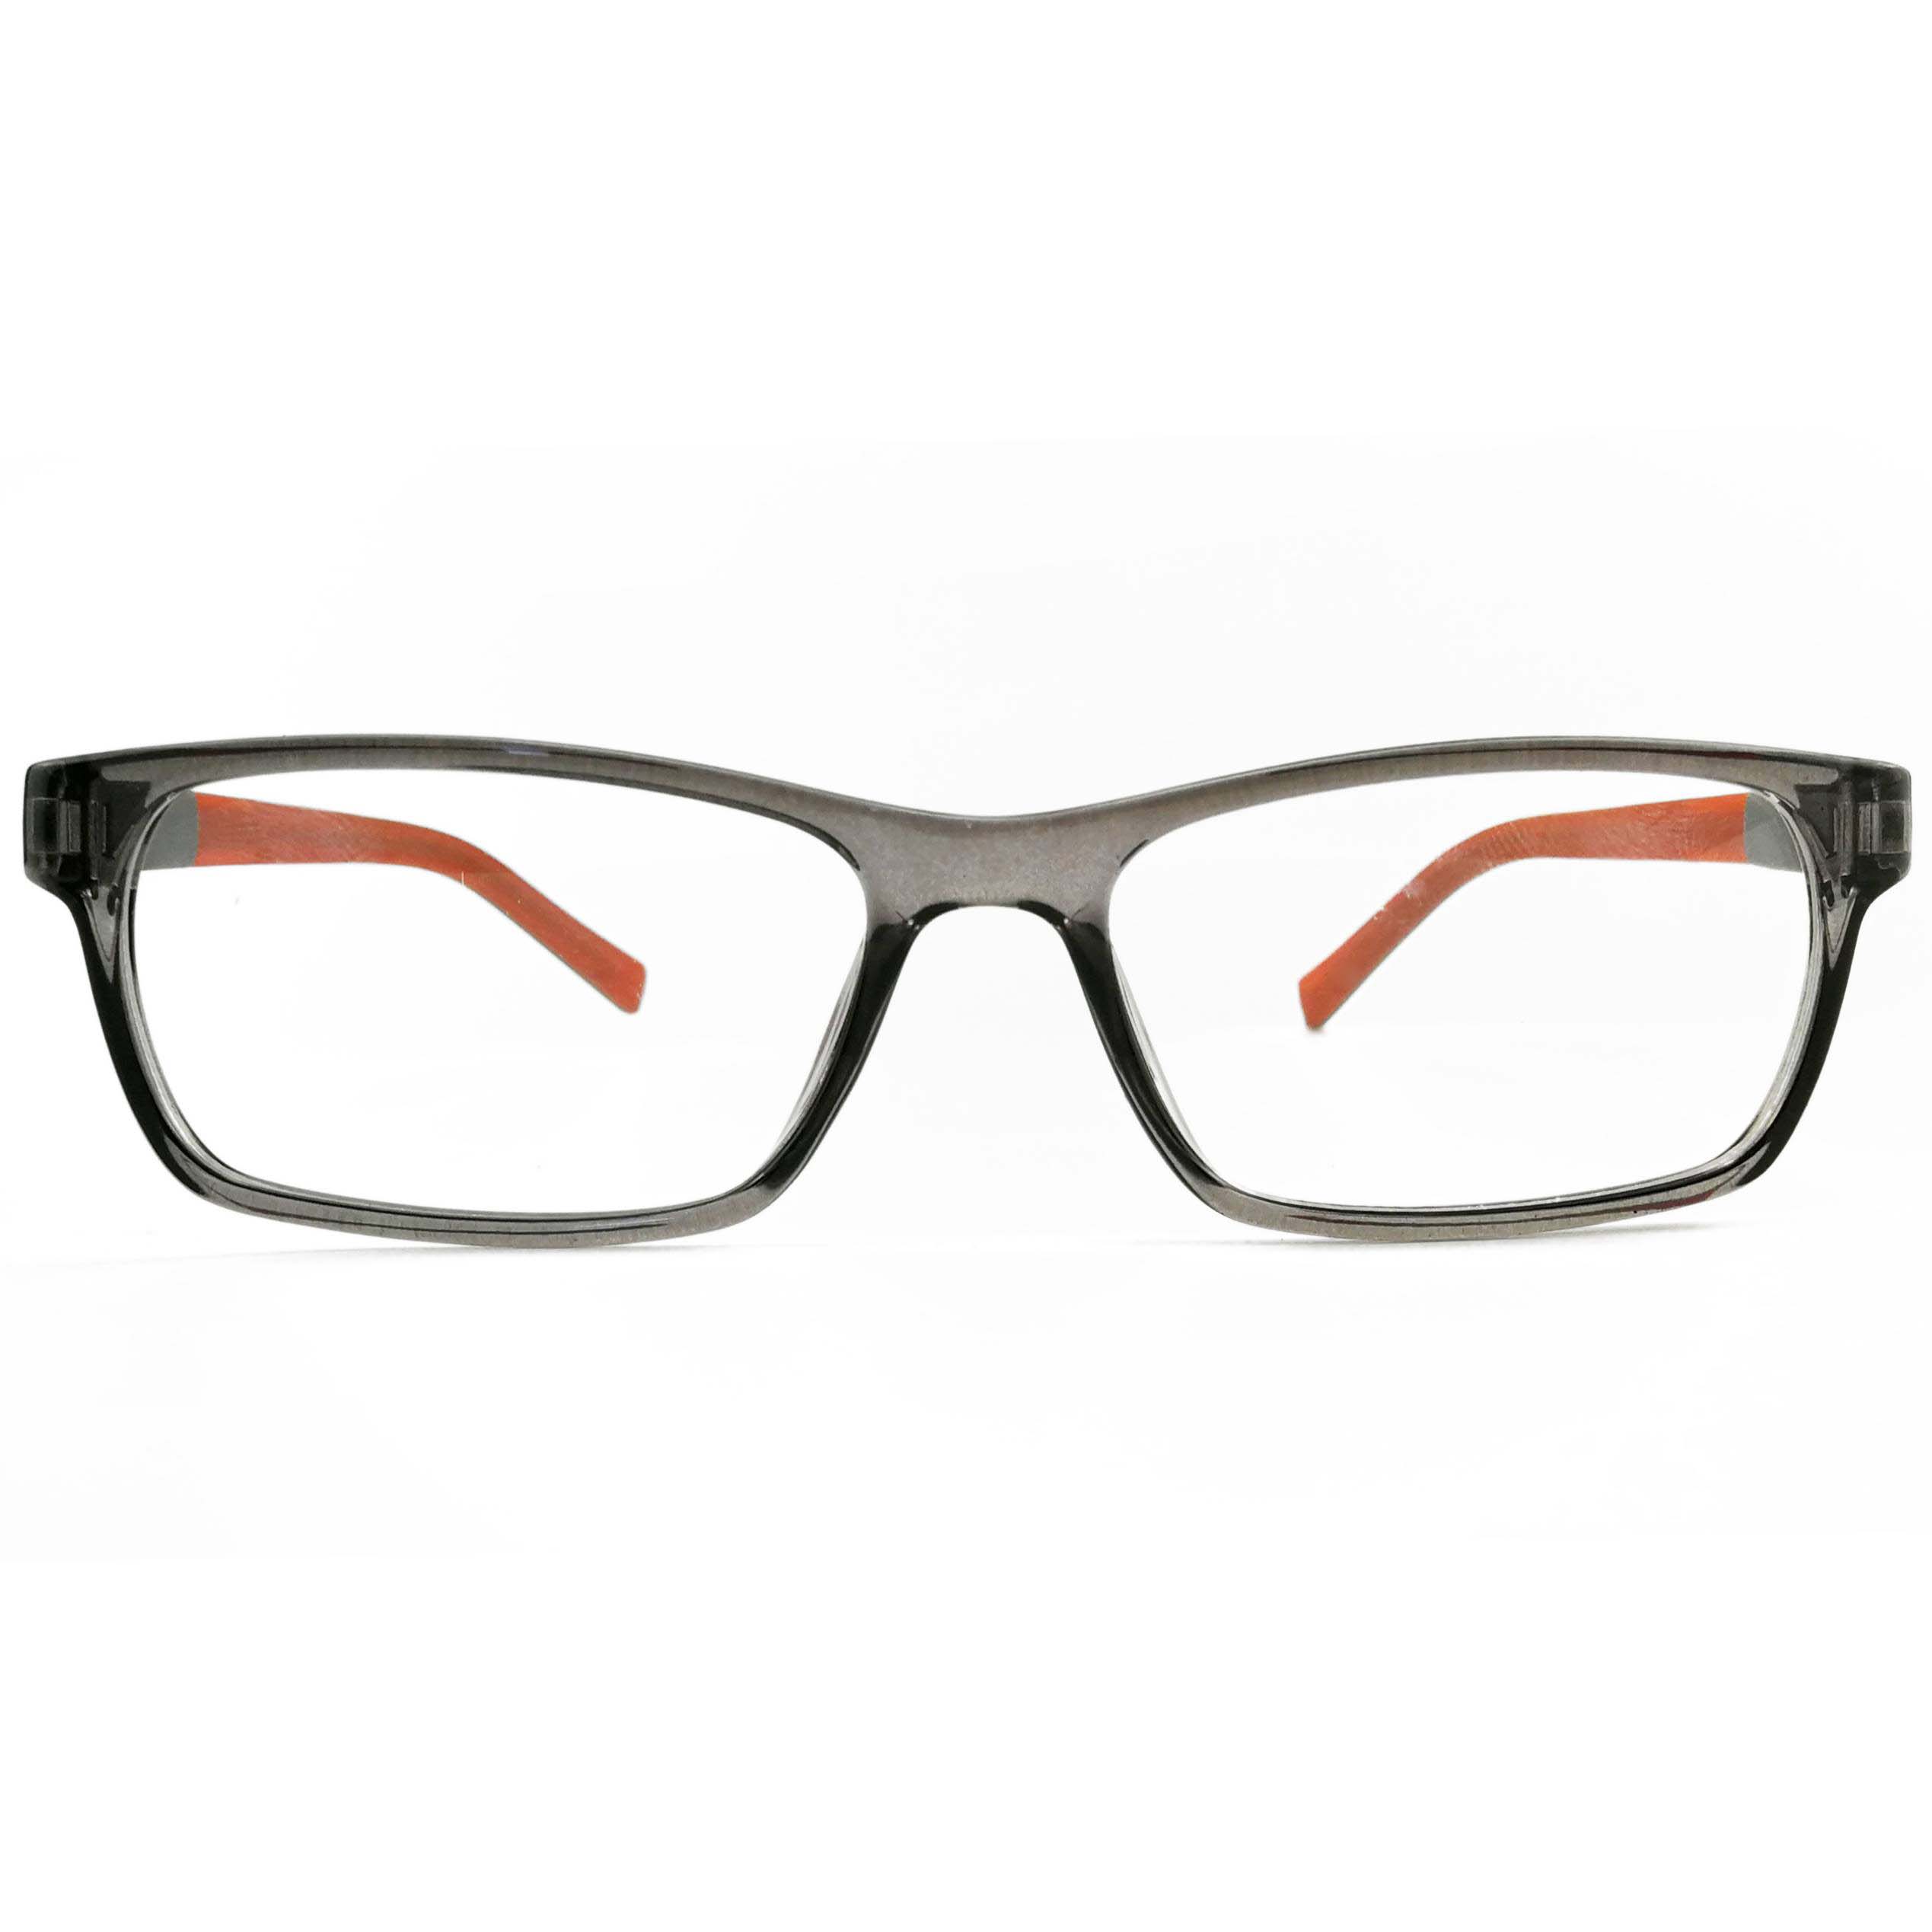 modern optical glasses wholesale For optical frame glasses-1